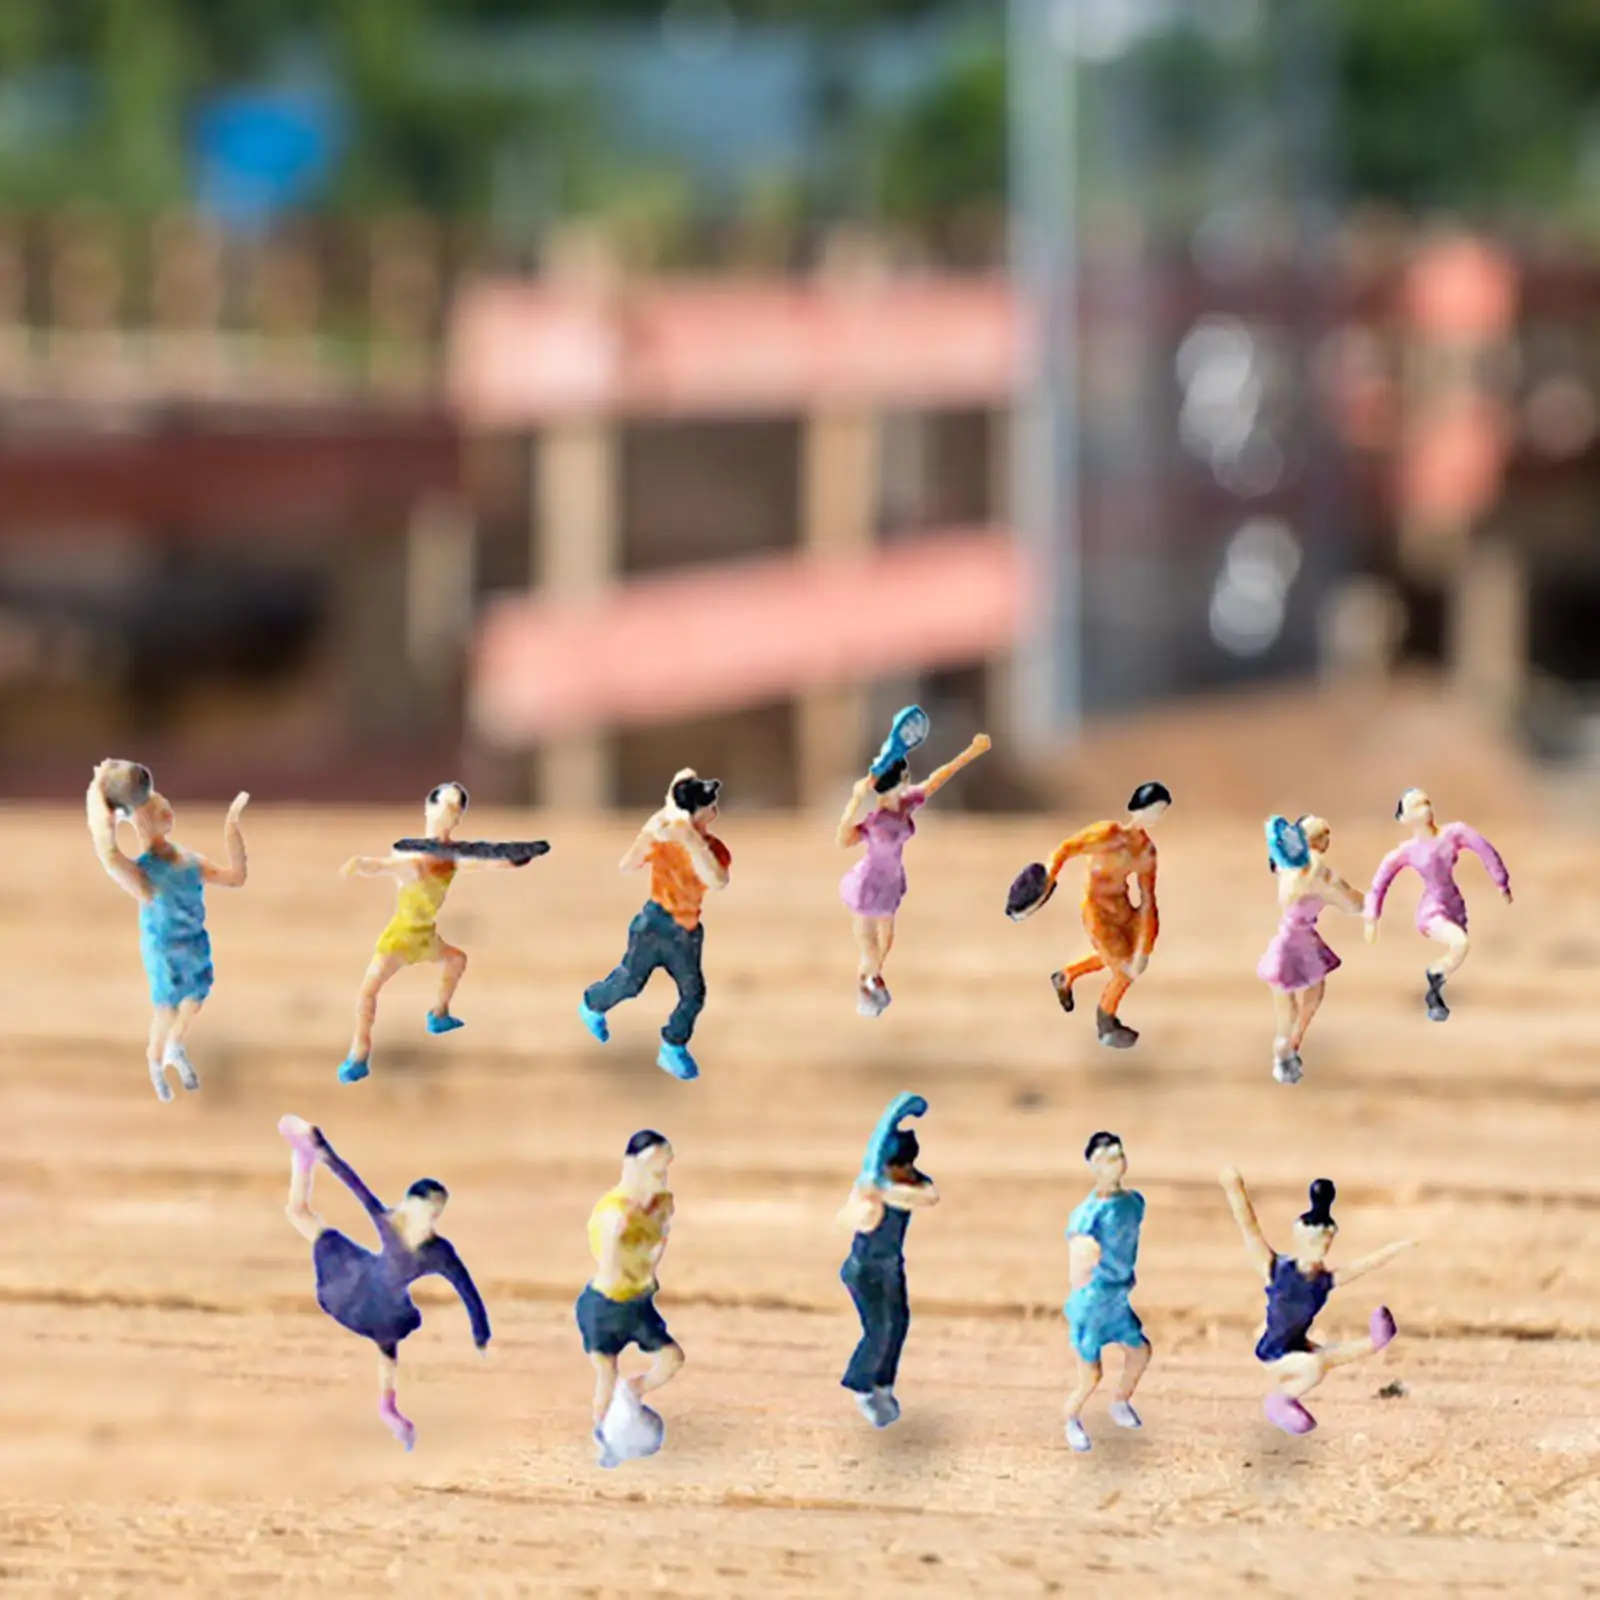 Miniature Sport Player Figurines, Miniature Model Figures, Mini People Model, Diorama Layout